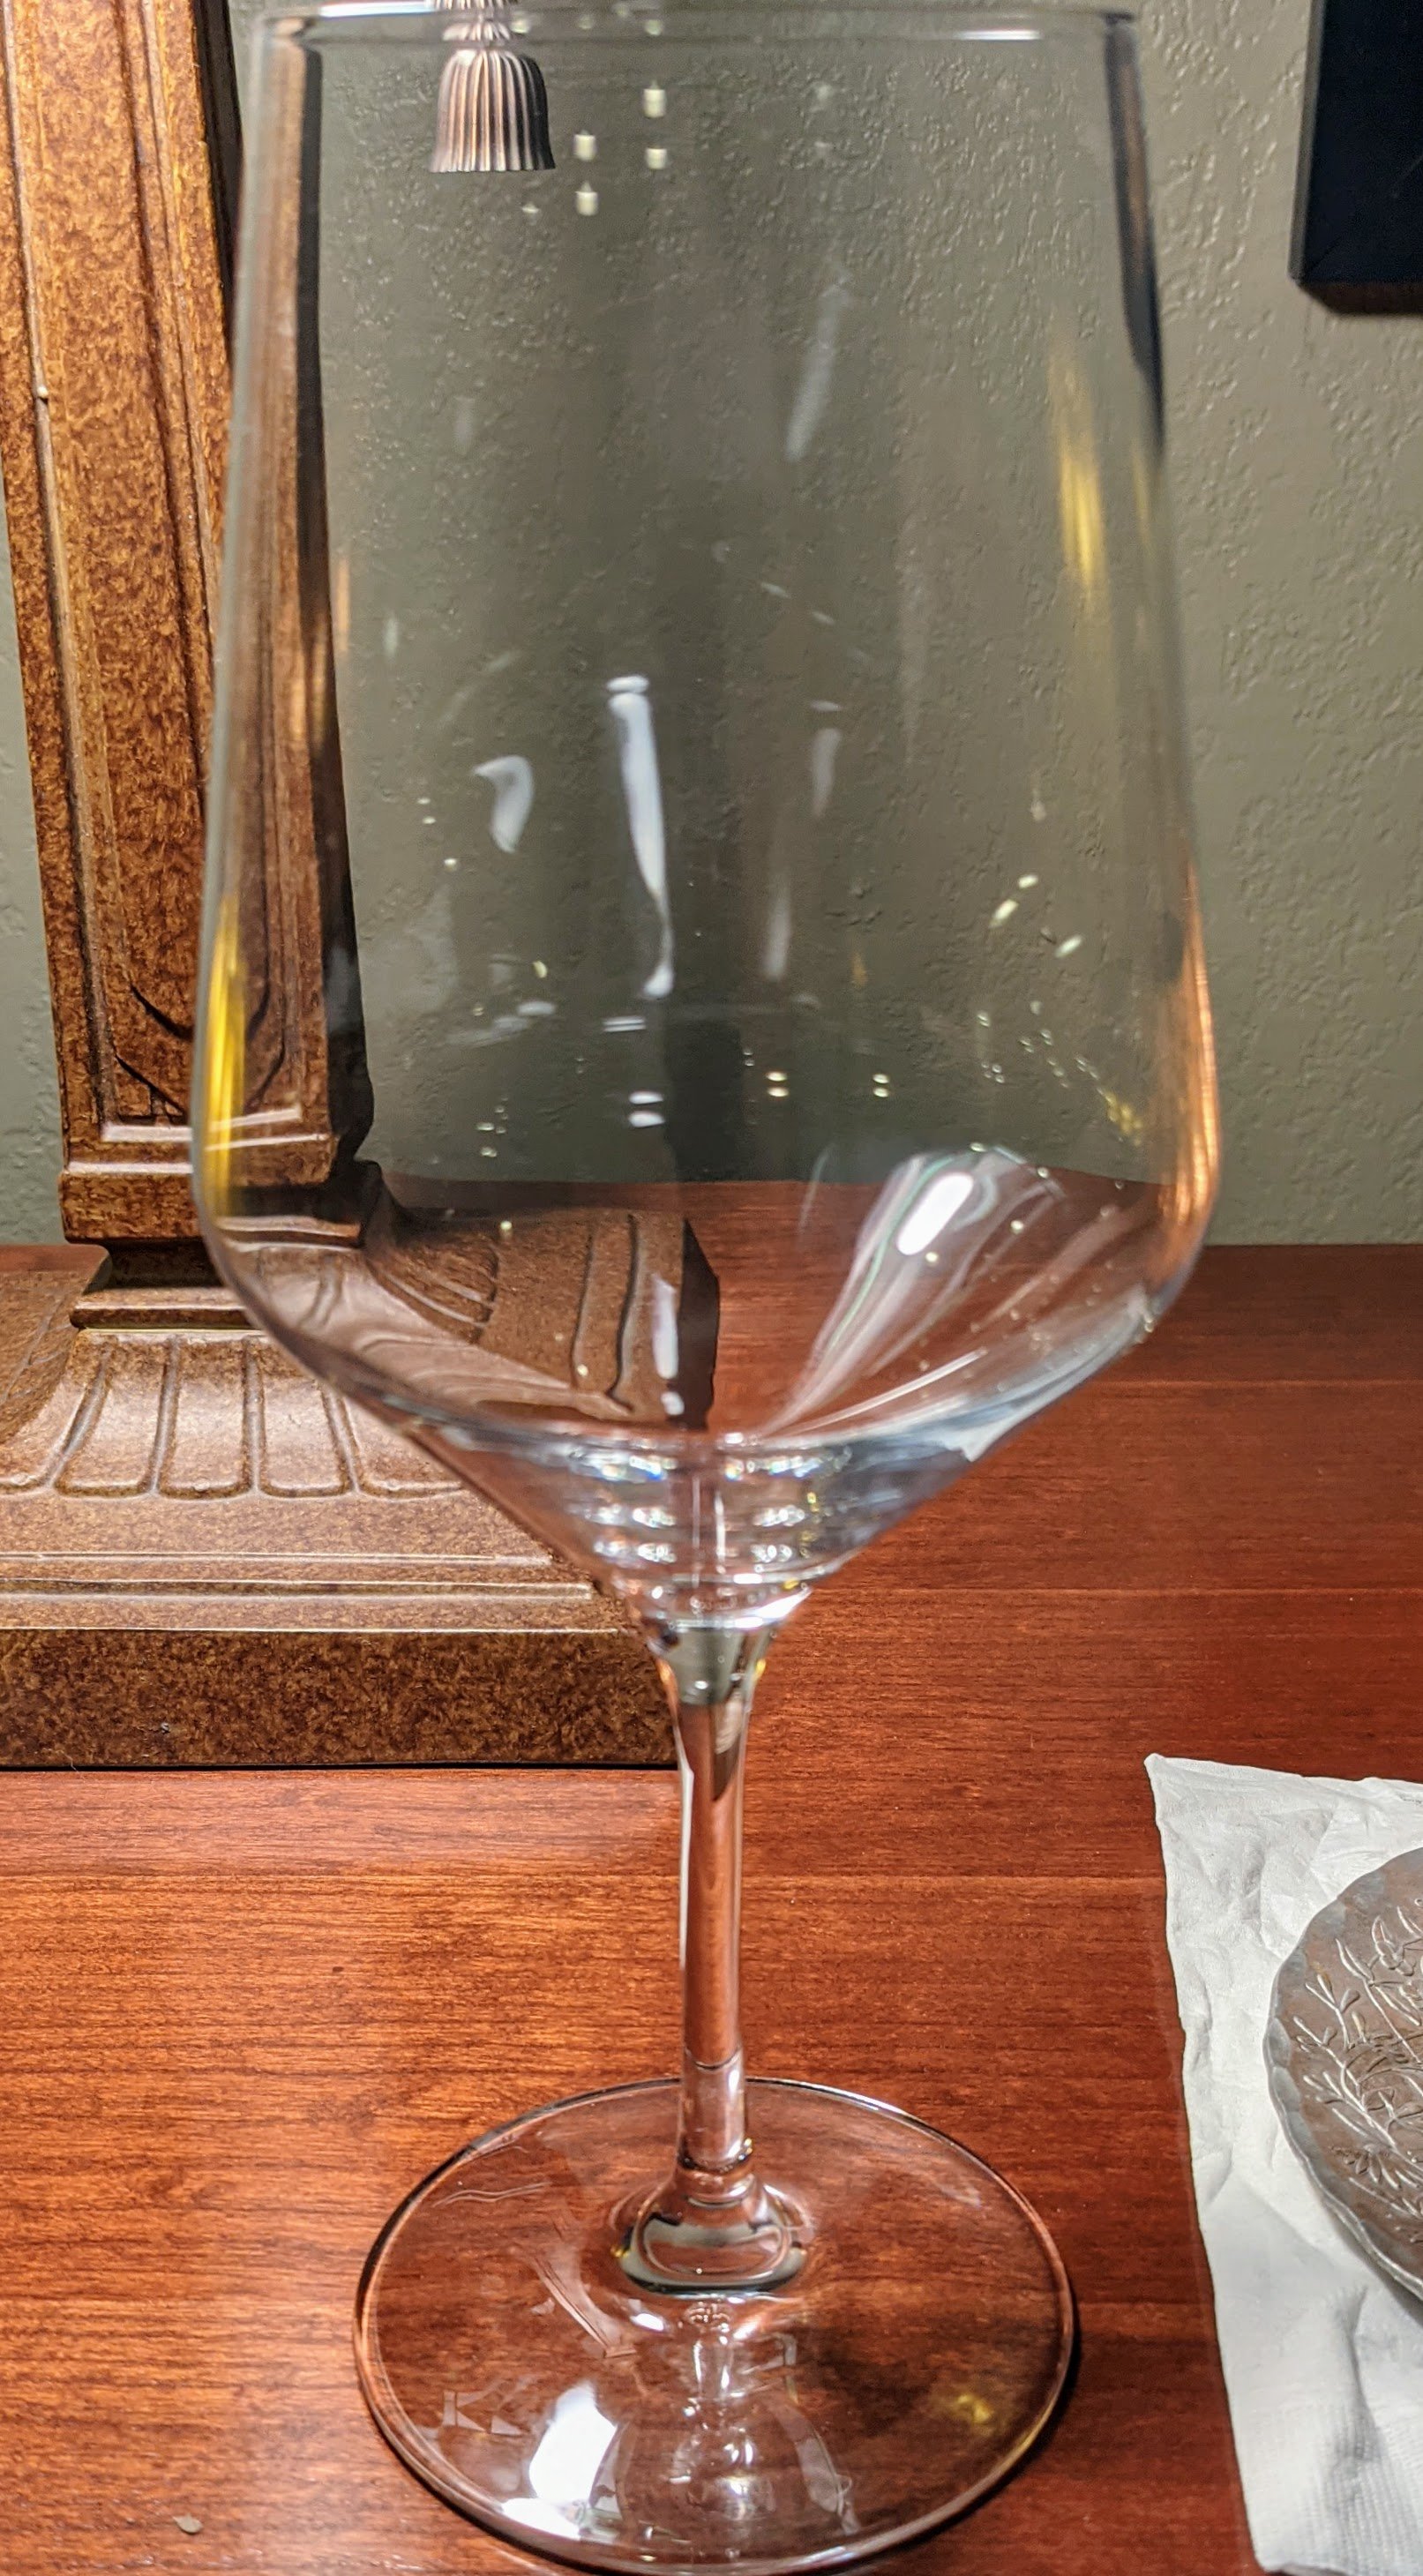 Costco Wine Glass Review: Stolzle All Purpose - WINE TALK